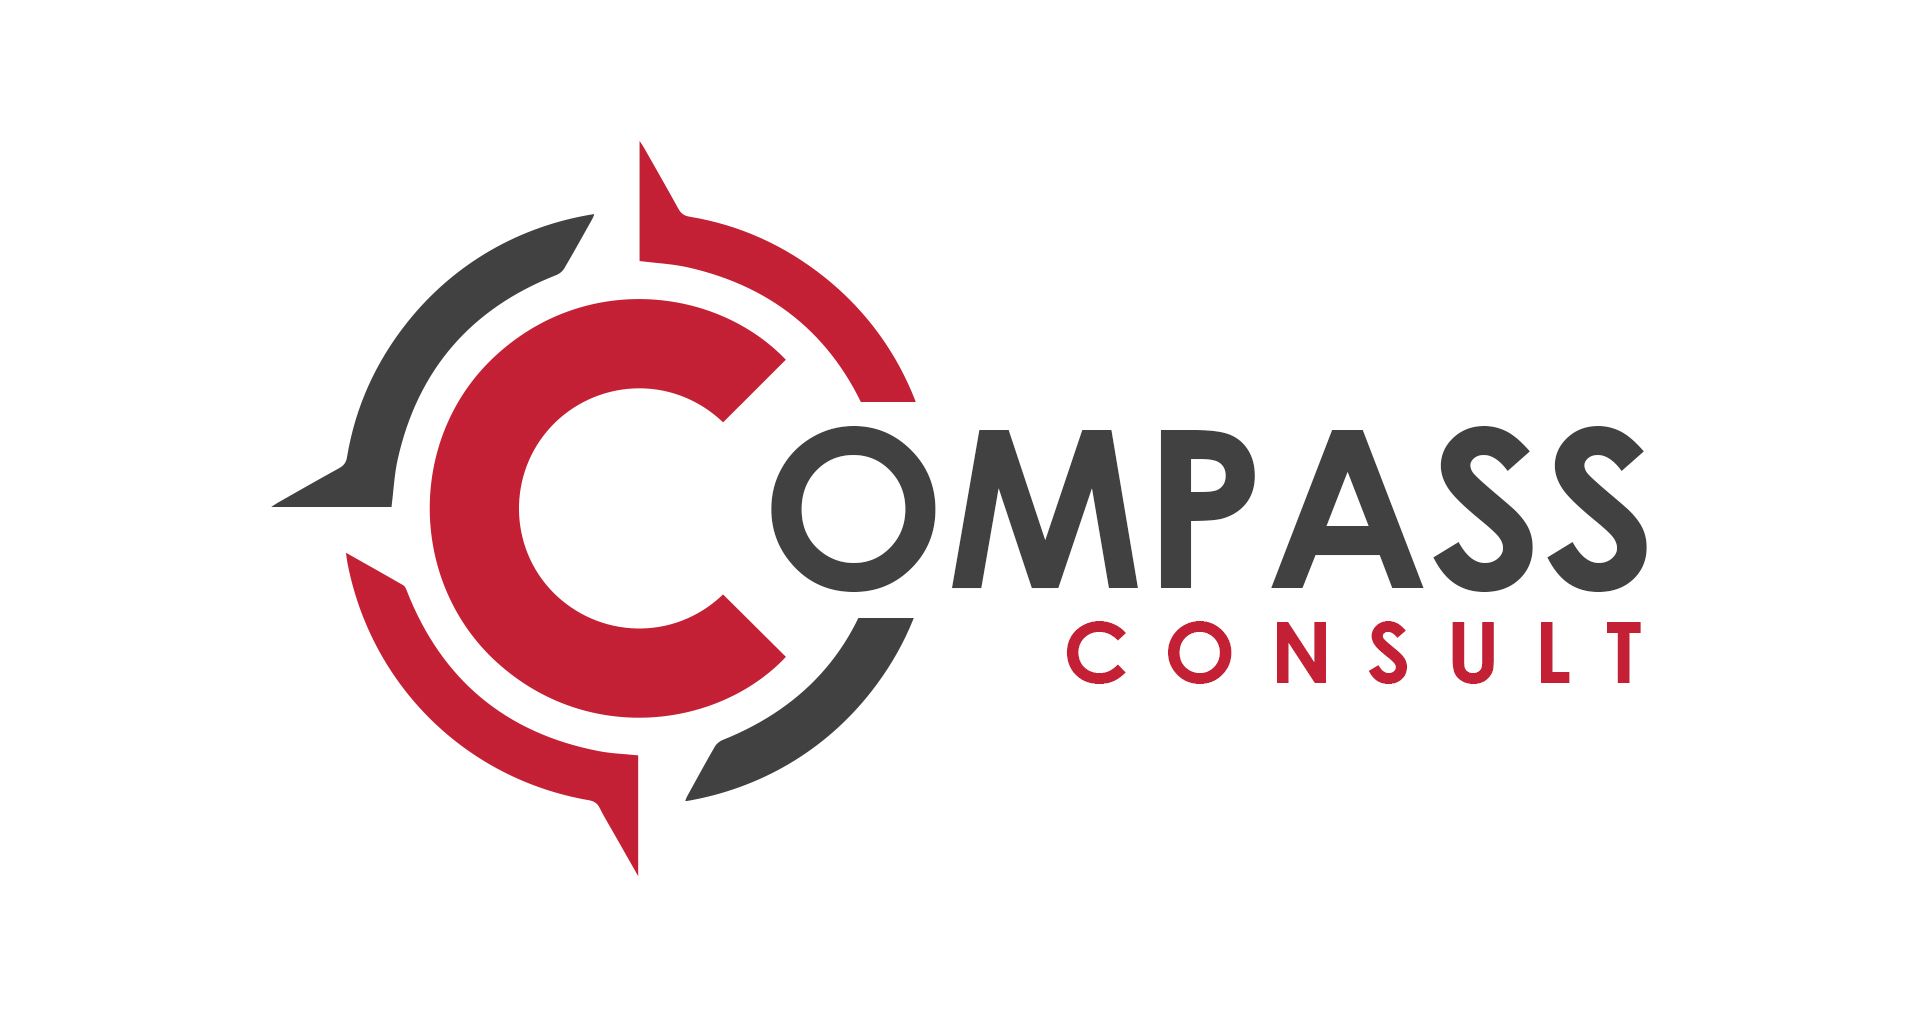 Compass Consult